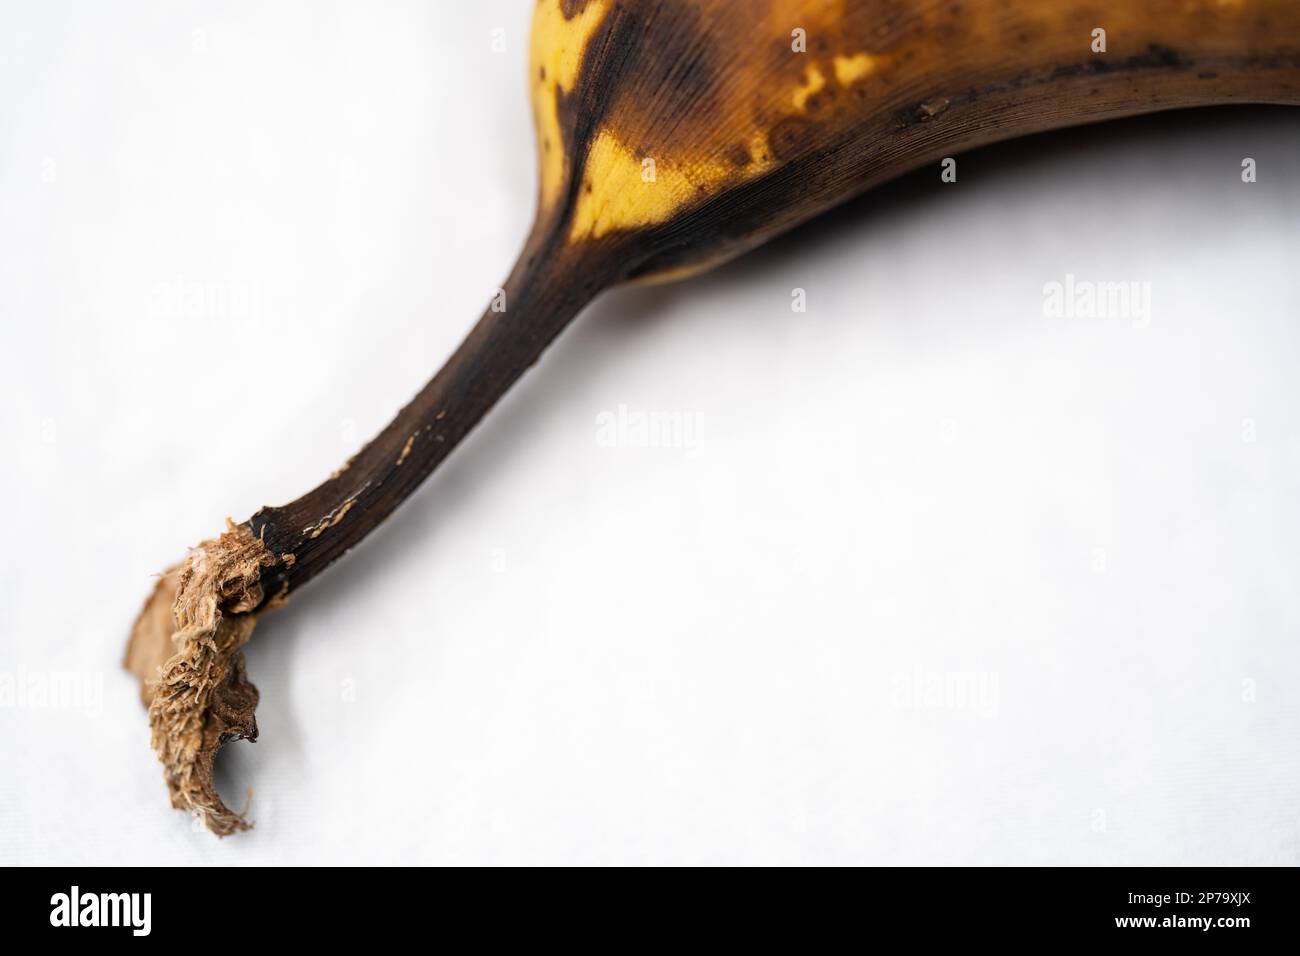 Ripe banana stem isolated on white background. Selective focus. Stock Photo